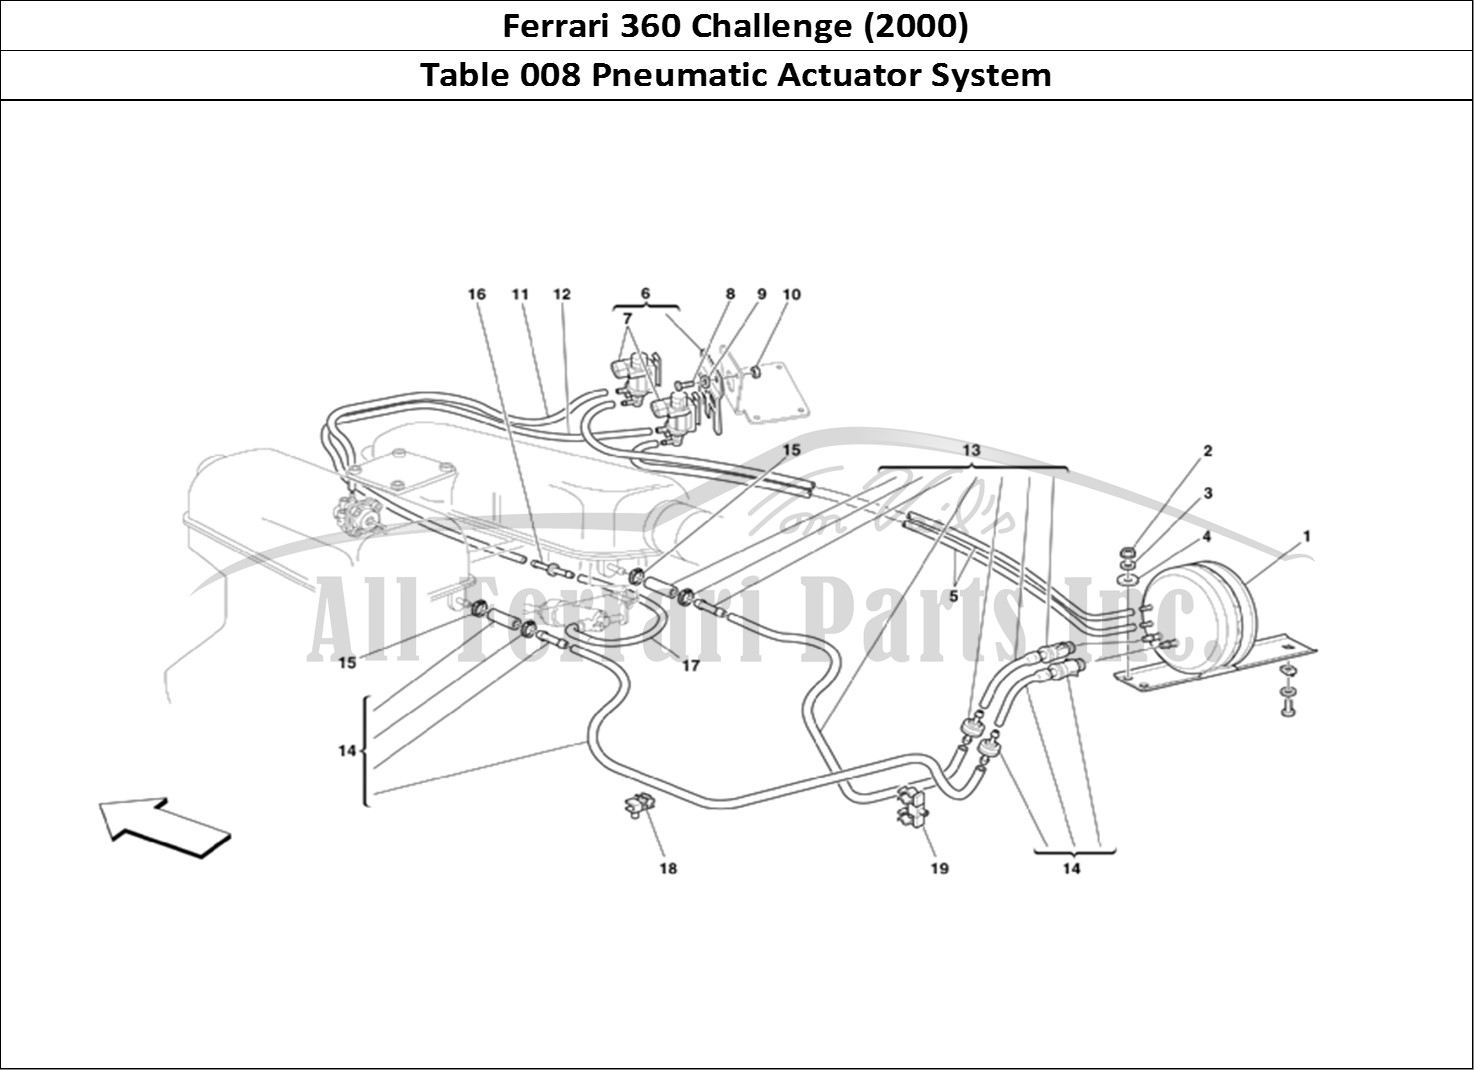 Ferrari Parts Ferrari 360 Challenge (2000) Page 008 Pneumatics Actuator Syste